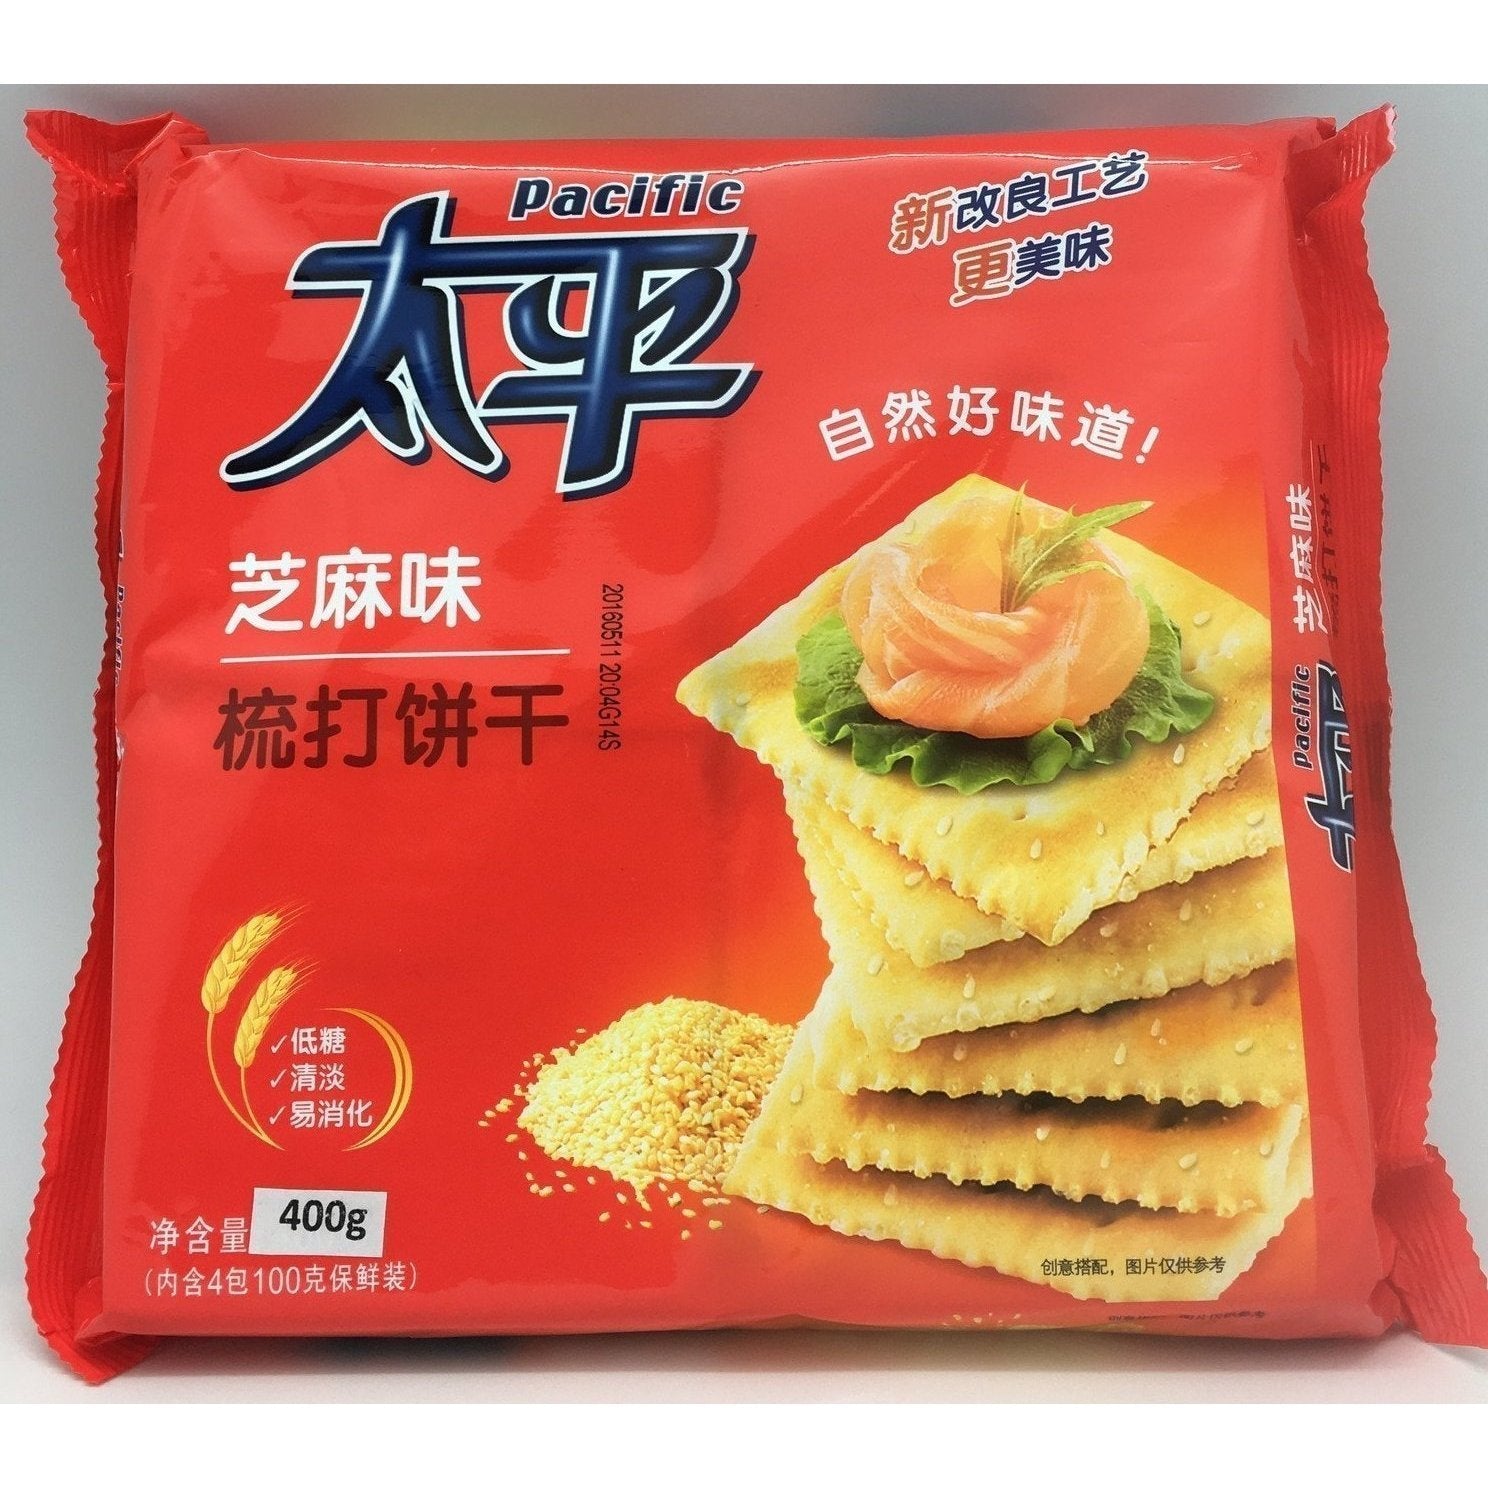 C035S Pacific Brand - Crackers Sesame Flavour 400g -  12 bags / 1CTN - New Eastland Pty Ltd - Asian food wholesalers